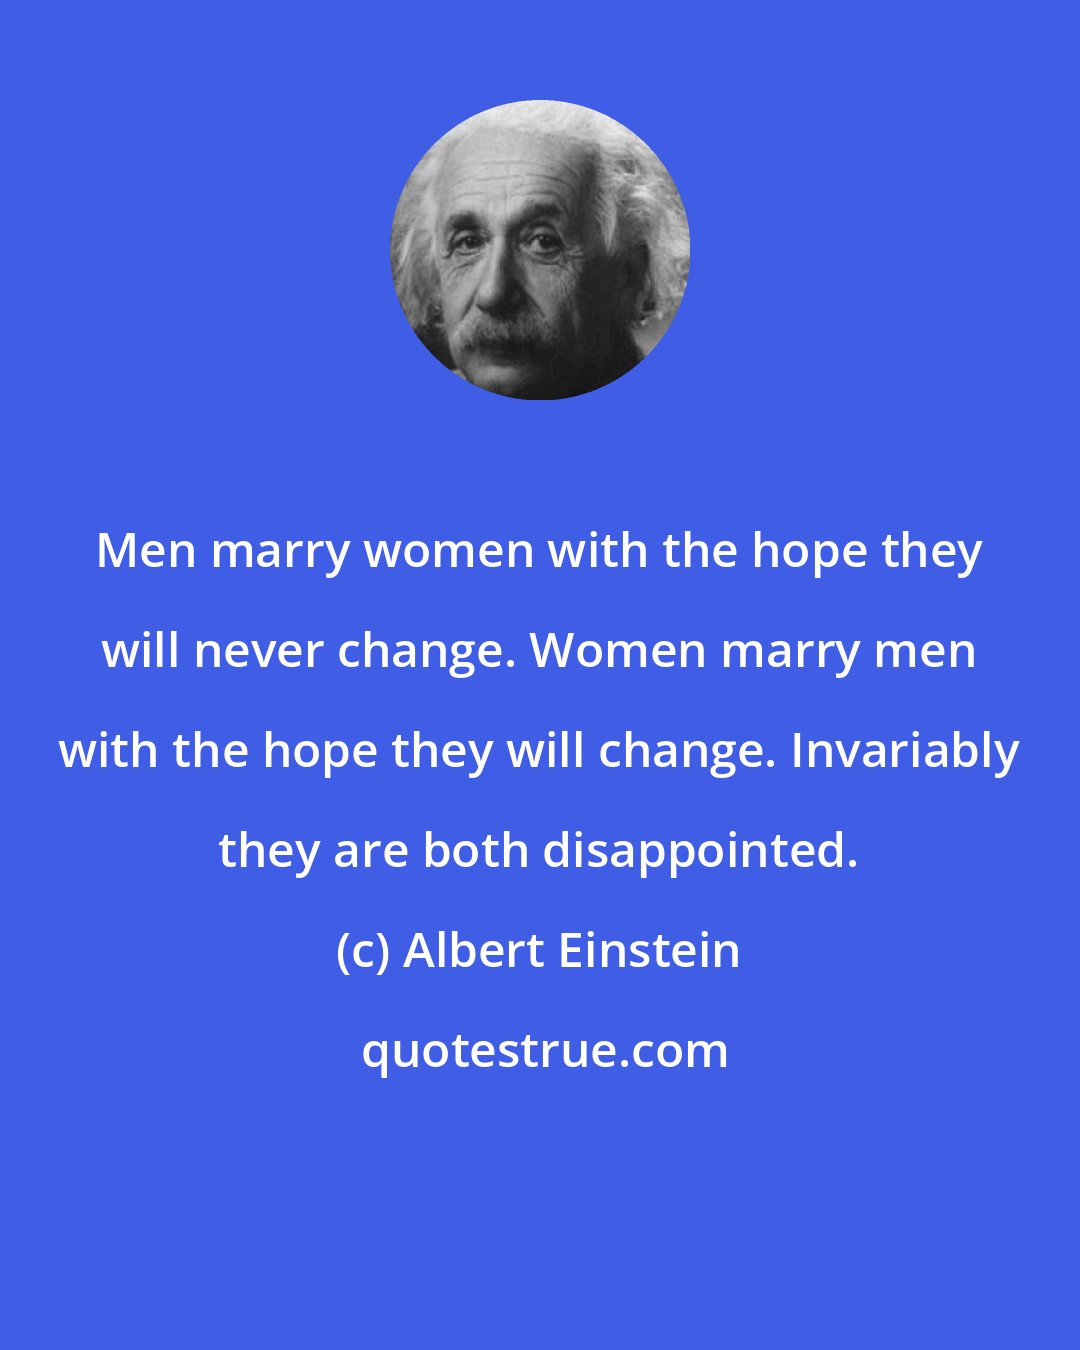 Albert Einstein: Men marry women with the hope they will never change. Women marry men with the hope they will change. Invariably they are both disappointed.